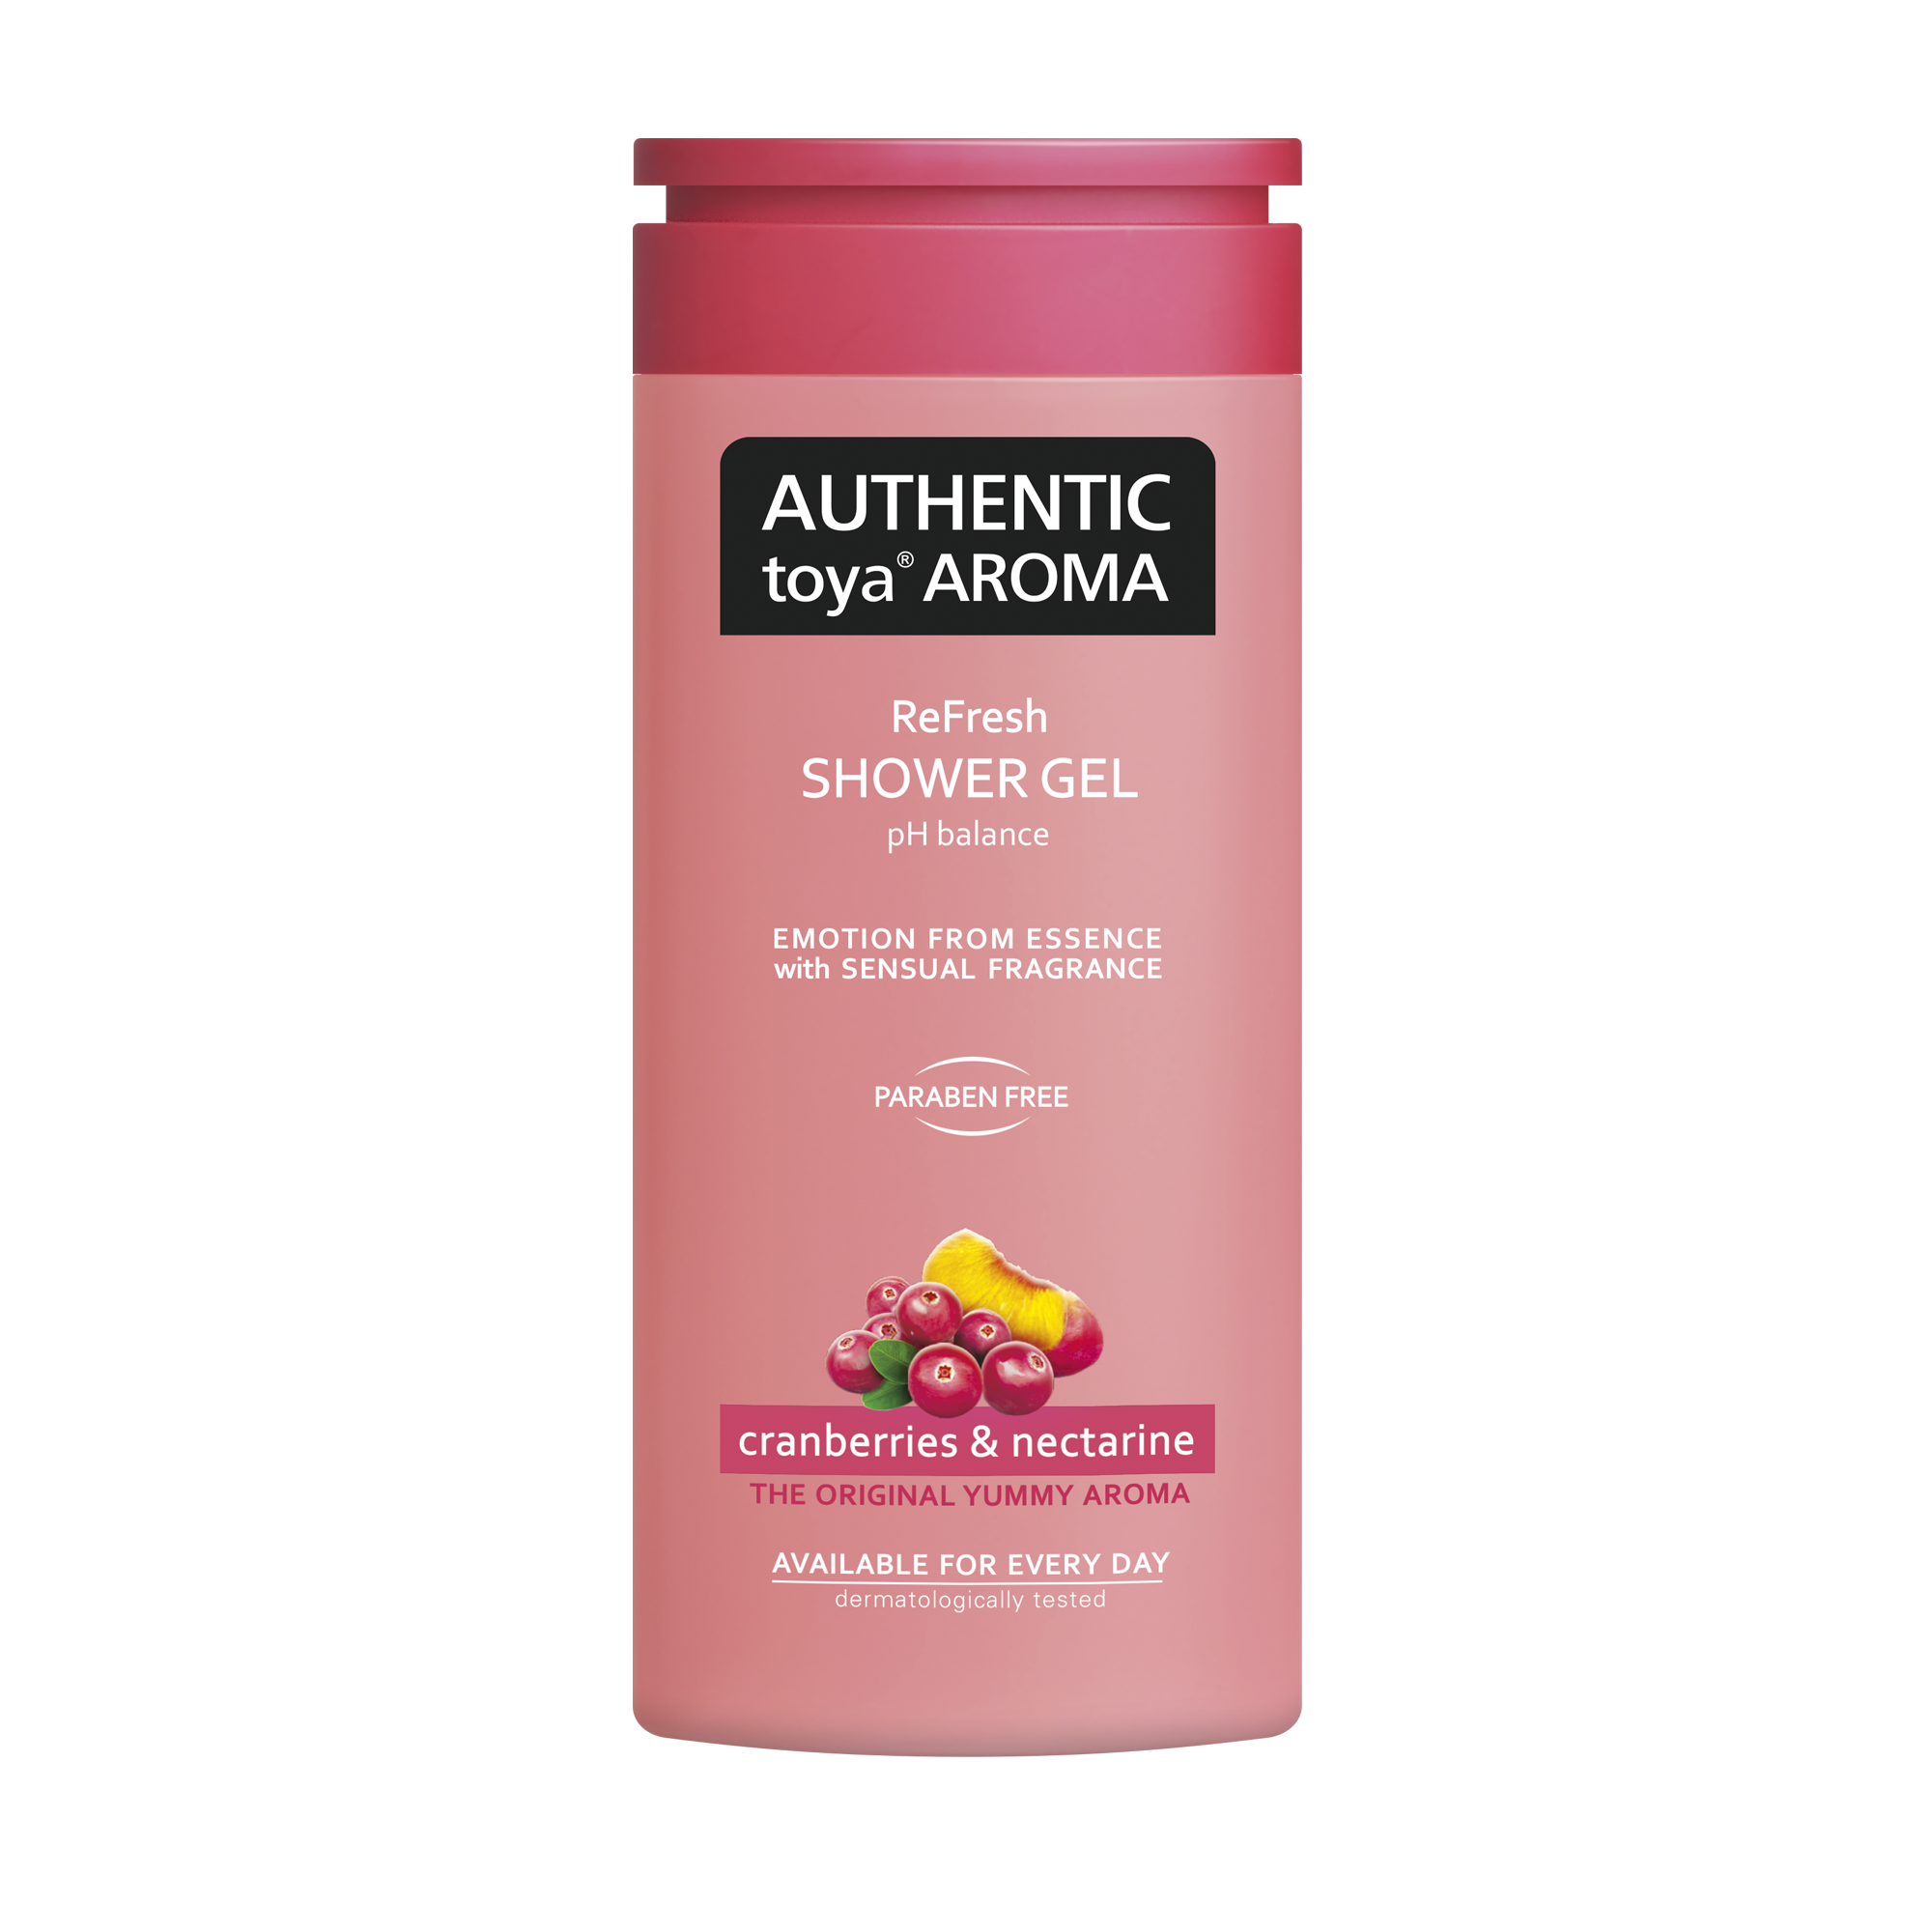 AUTHENTIC toya AROMA – sprchový gel cranberries & nectarine